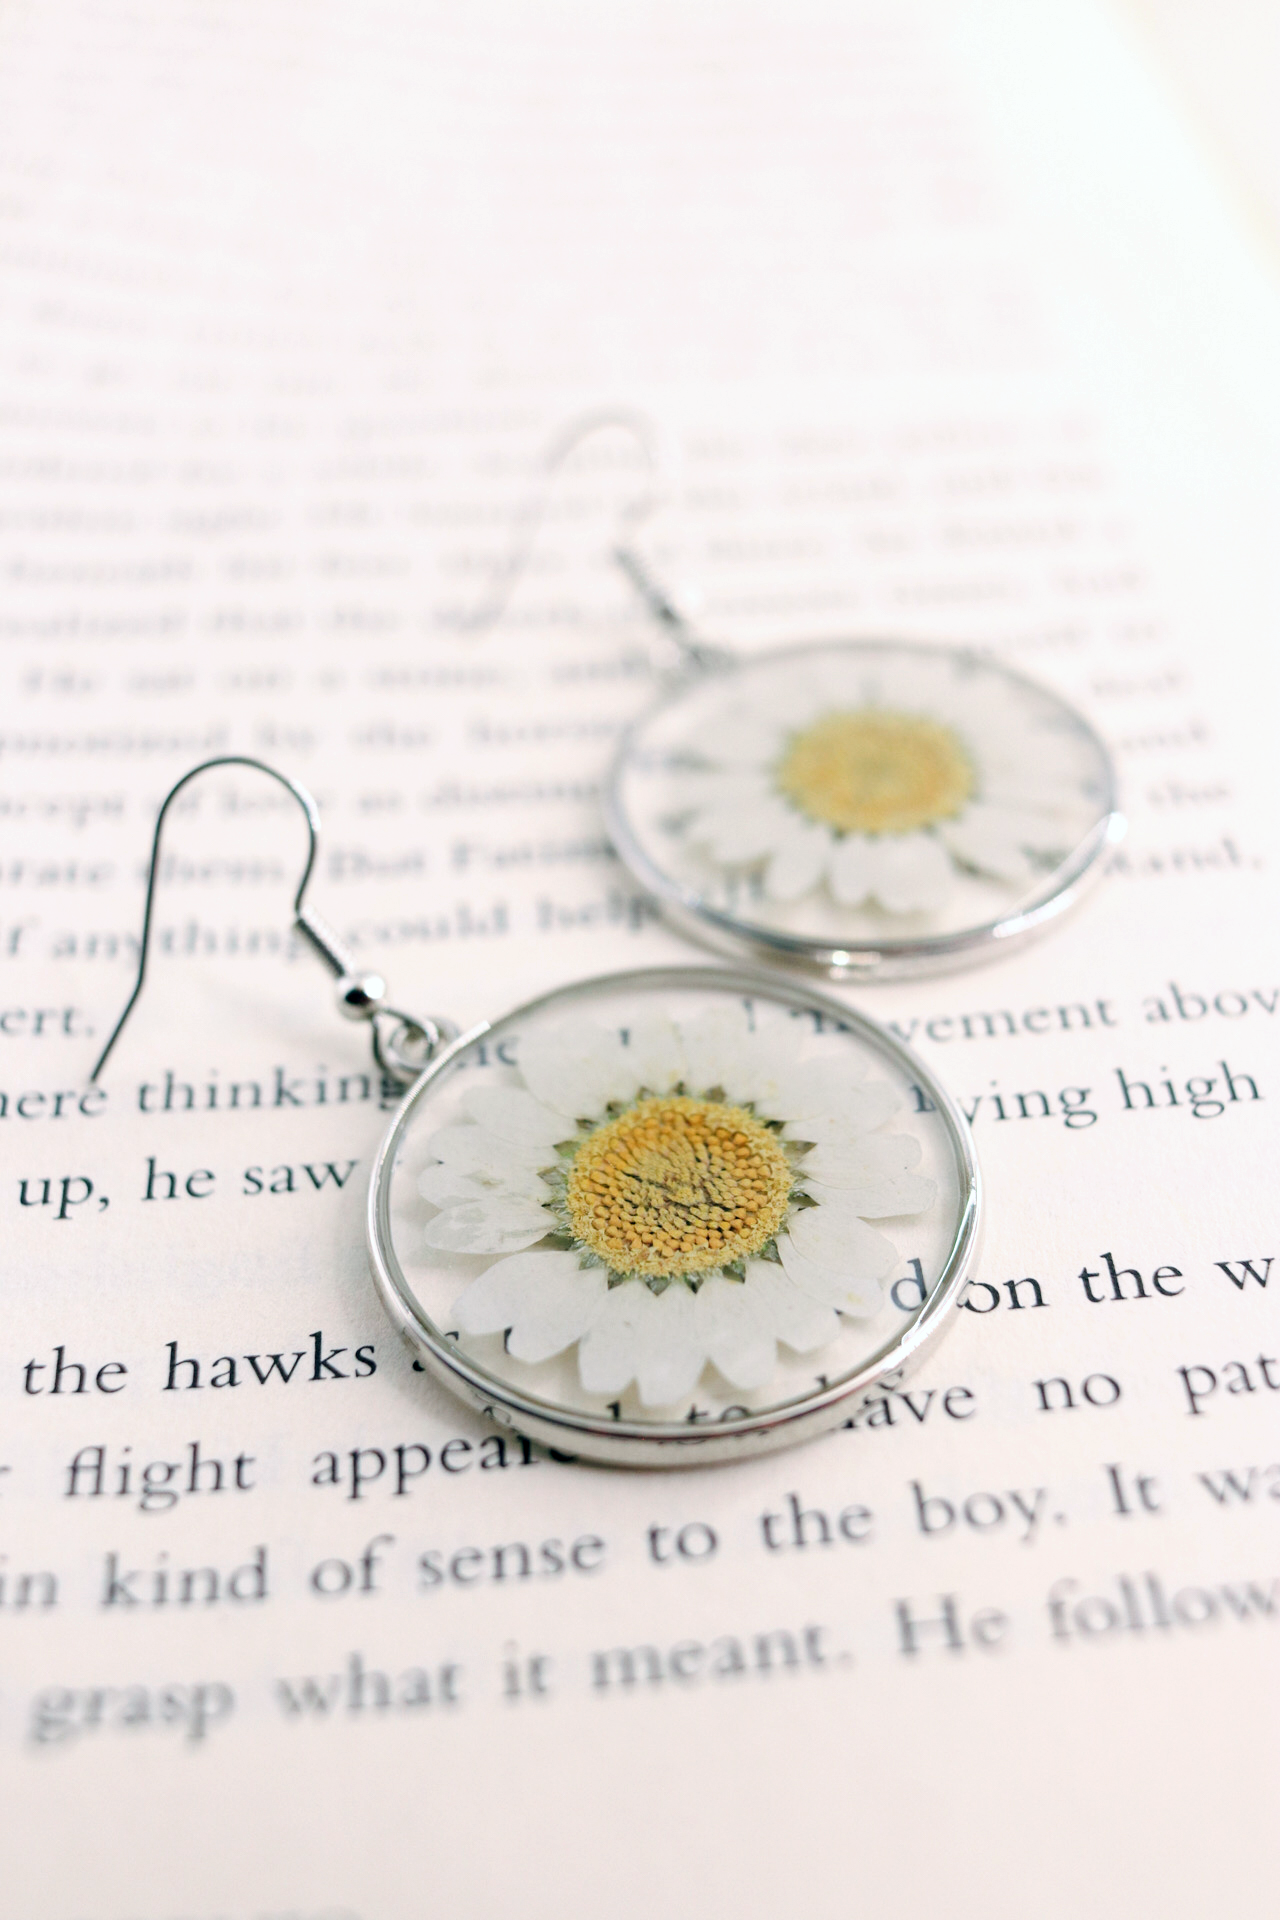 Real Pressed White Daisy Wildflower Earrings - Botanical Resin Dangles - Nature-Inspired Plant Lover's Gift"